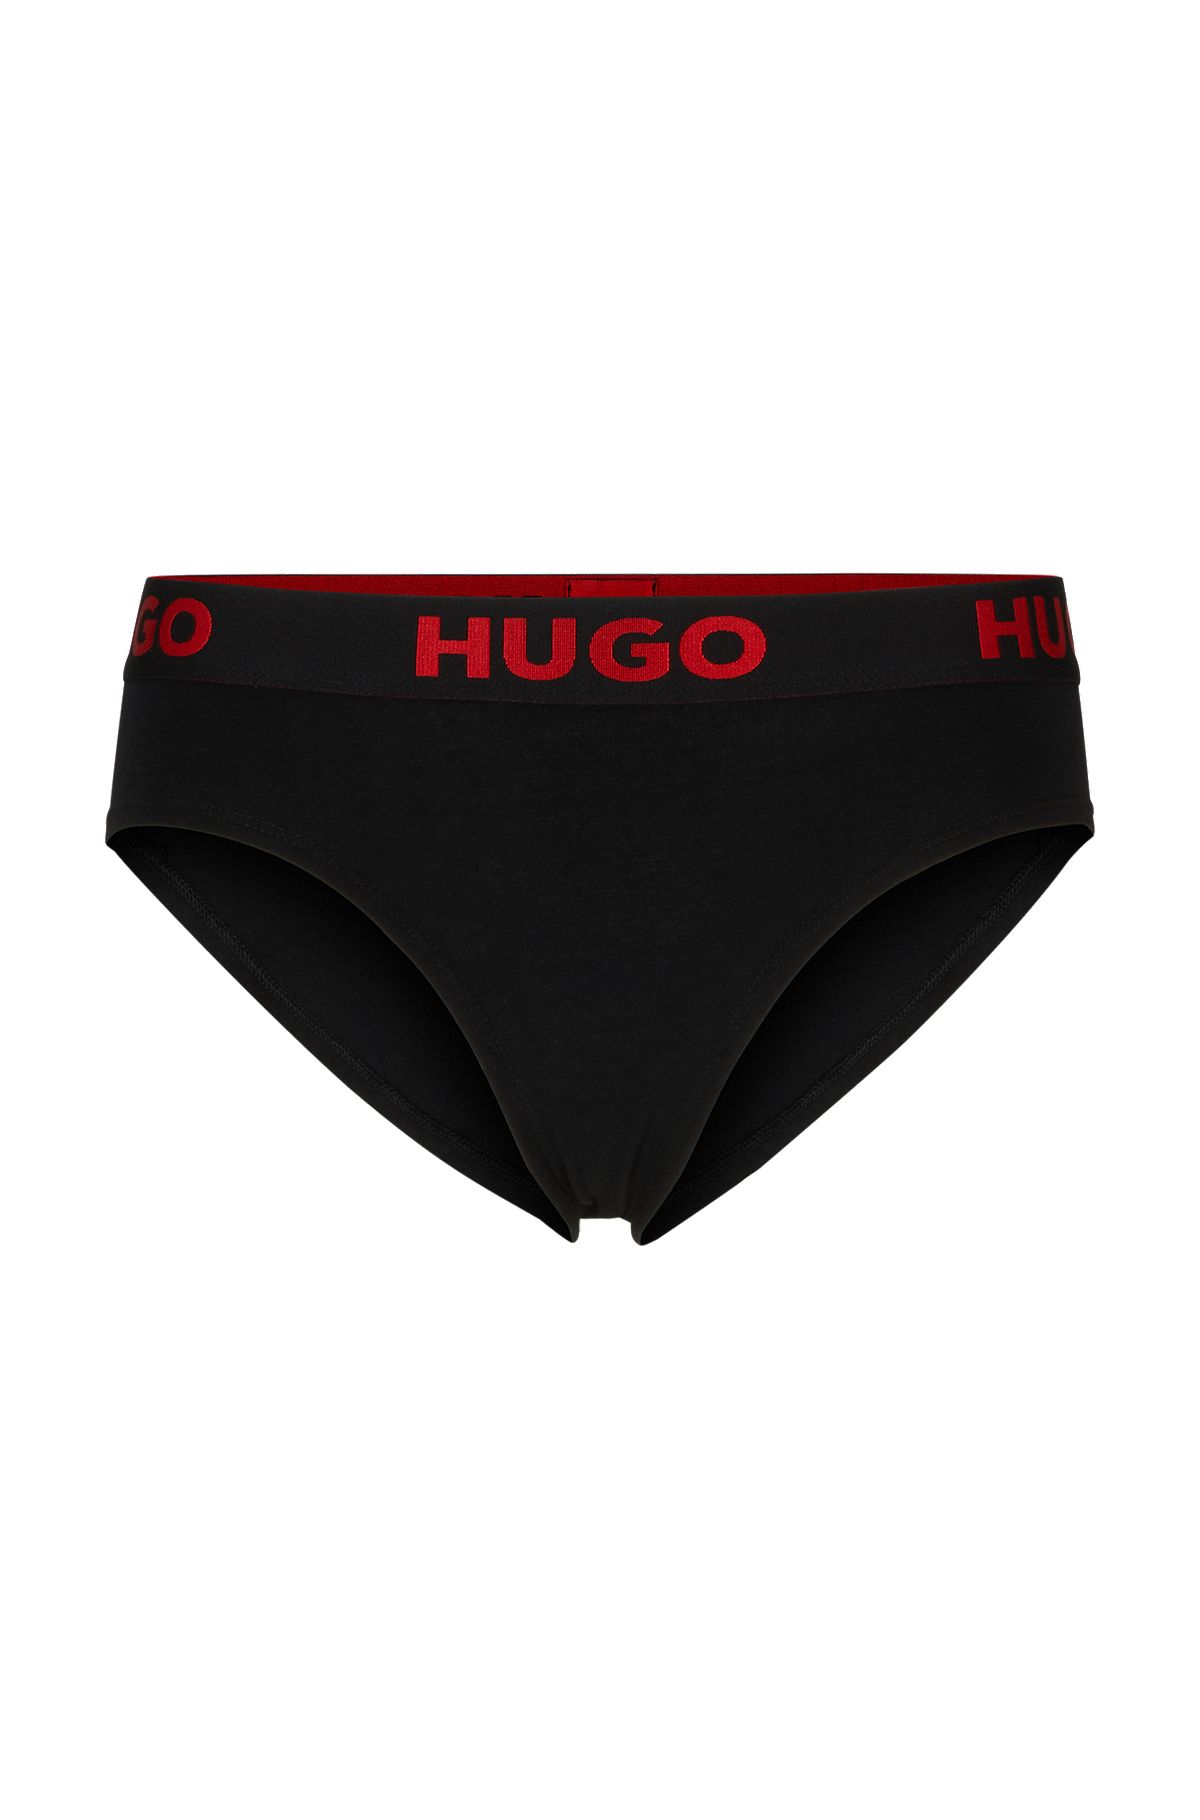 HUGO - Stretch-cotton label logo with briefs red